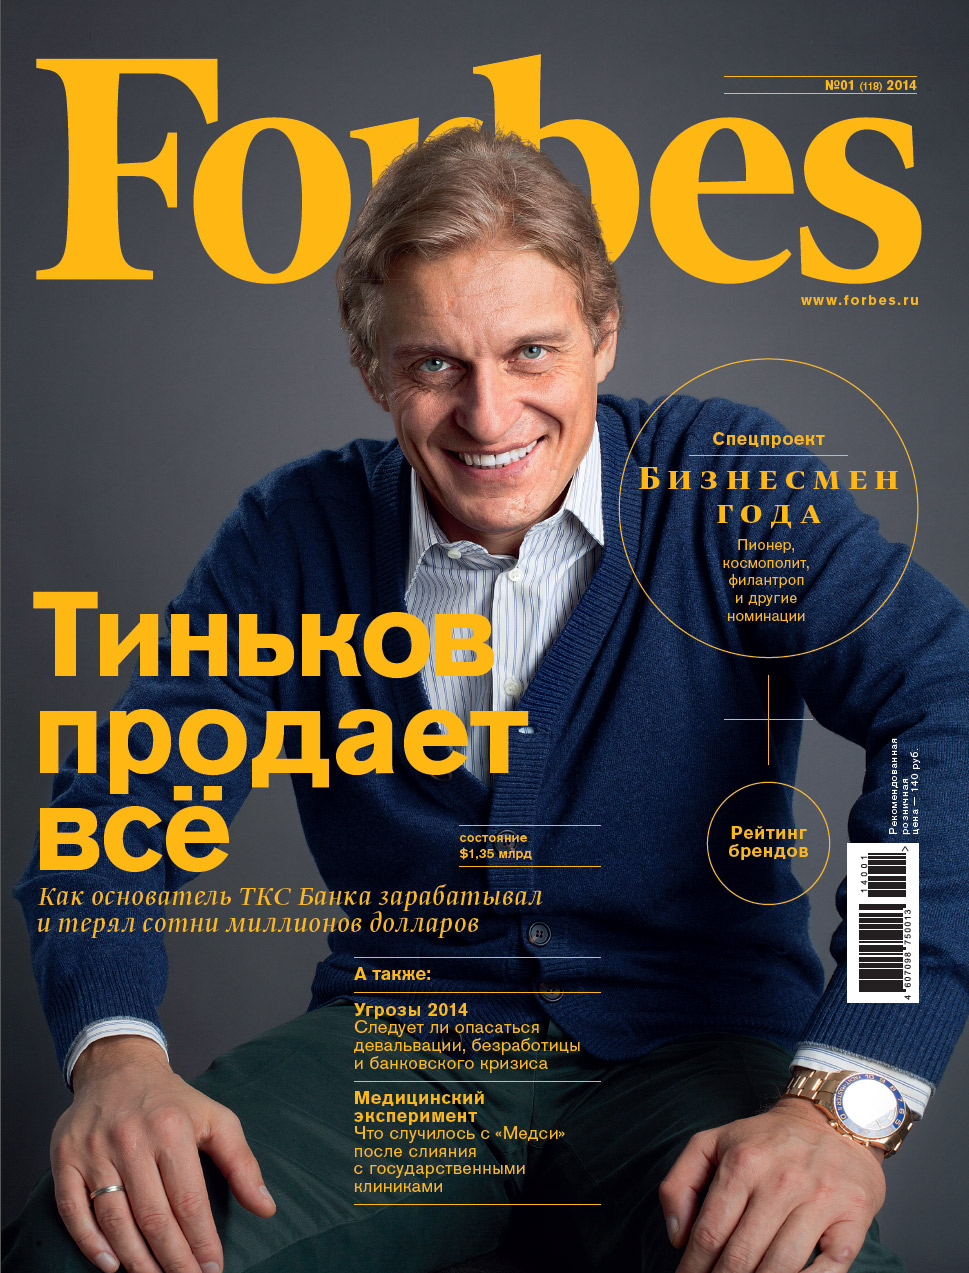 Обложка январского номера Forbes